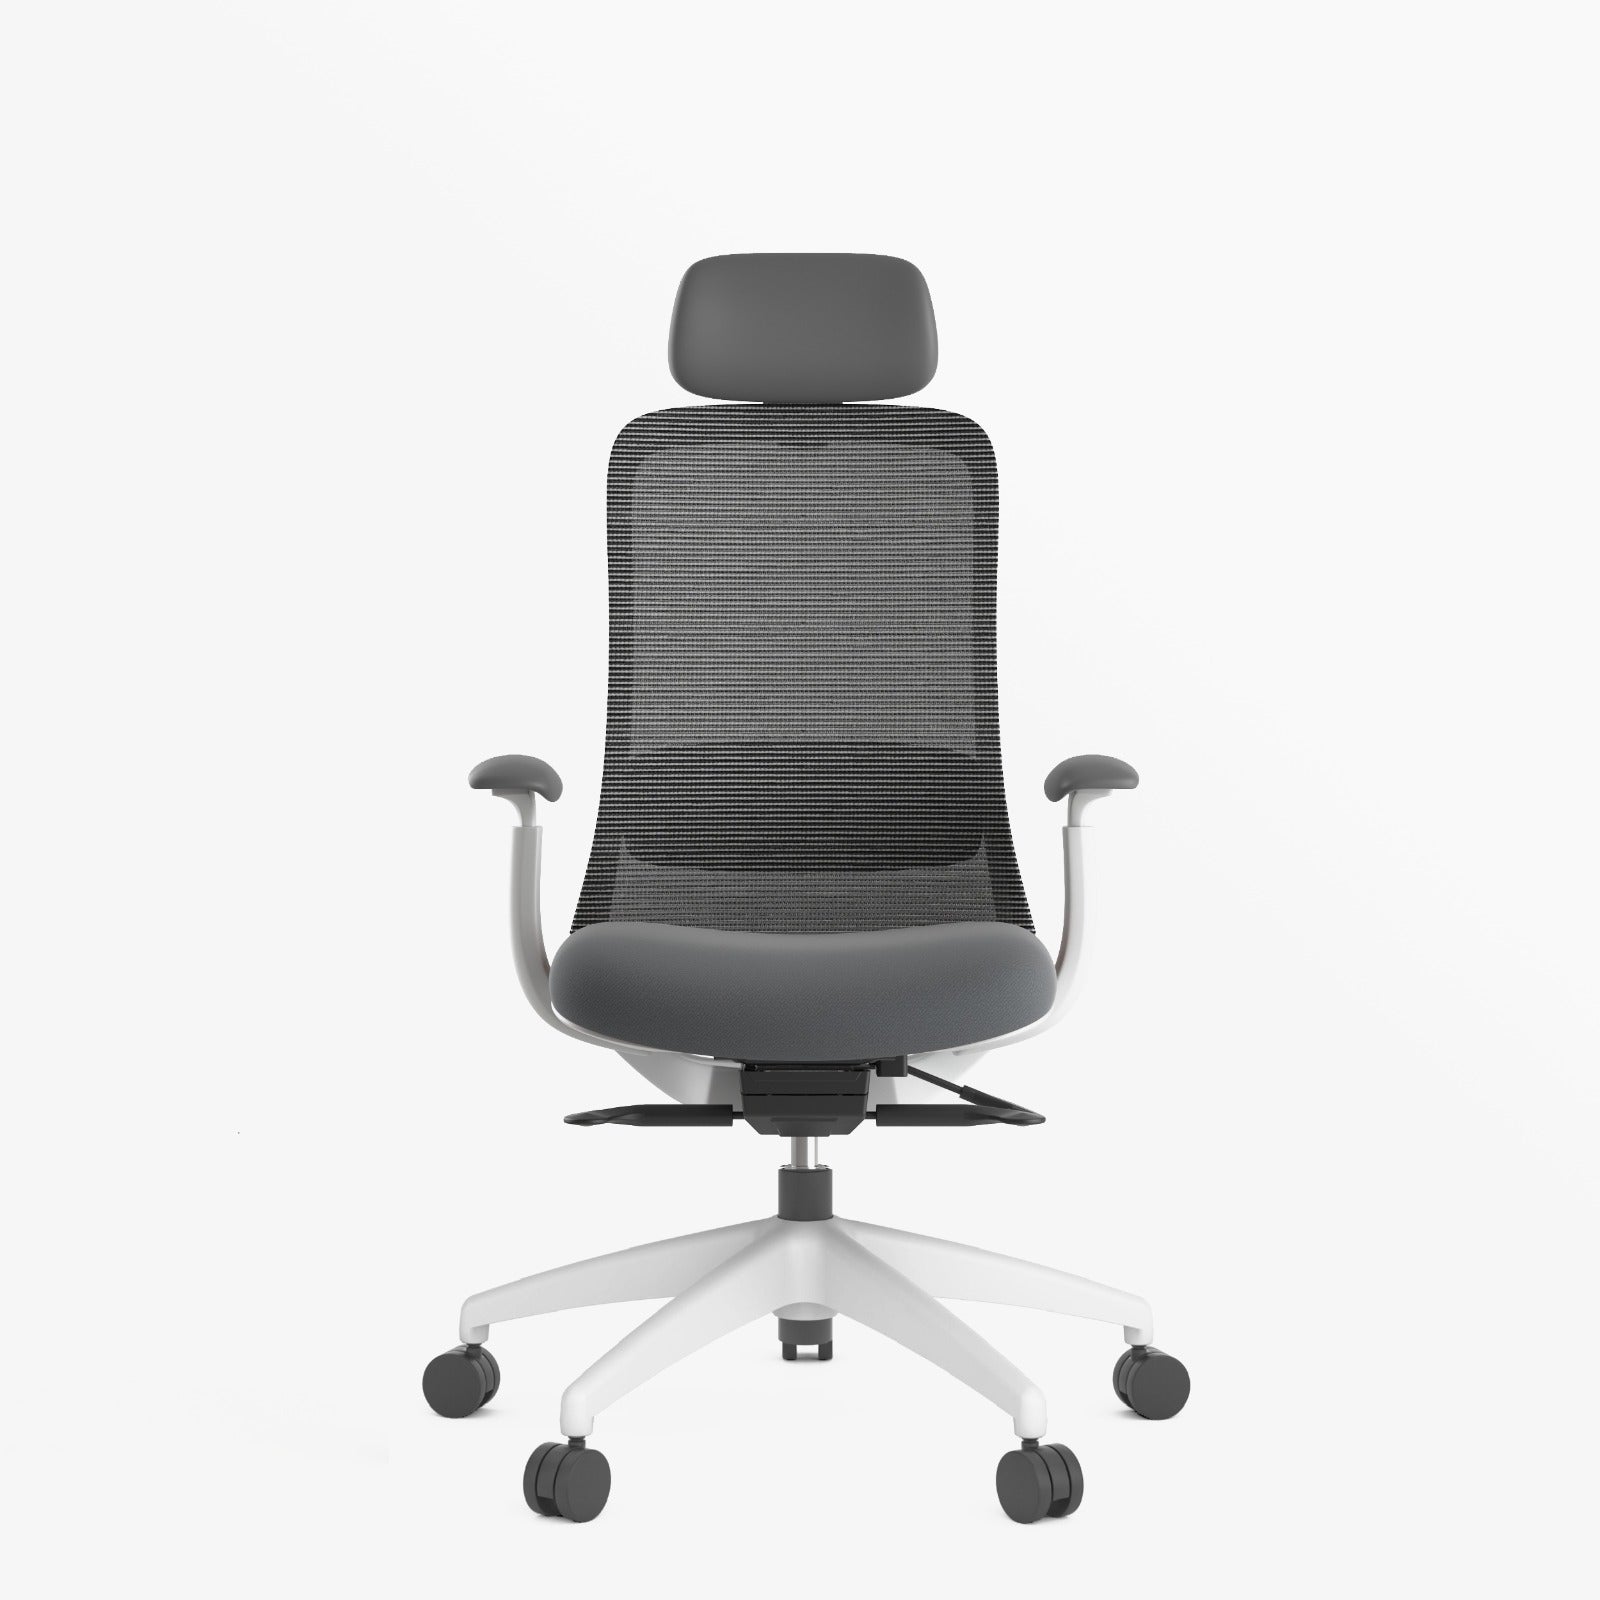 Stella Executive Ergonomic High-back Mesh Chair with Headrest, Dark Gray